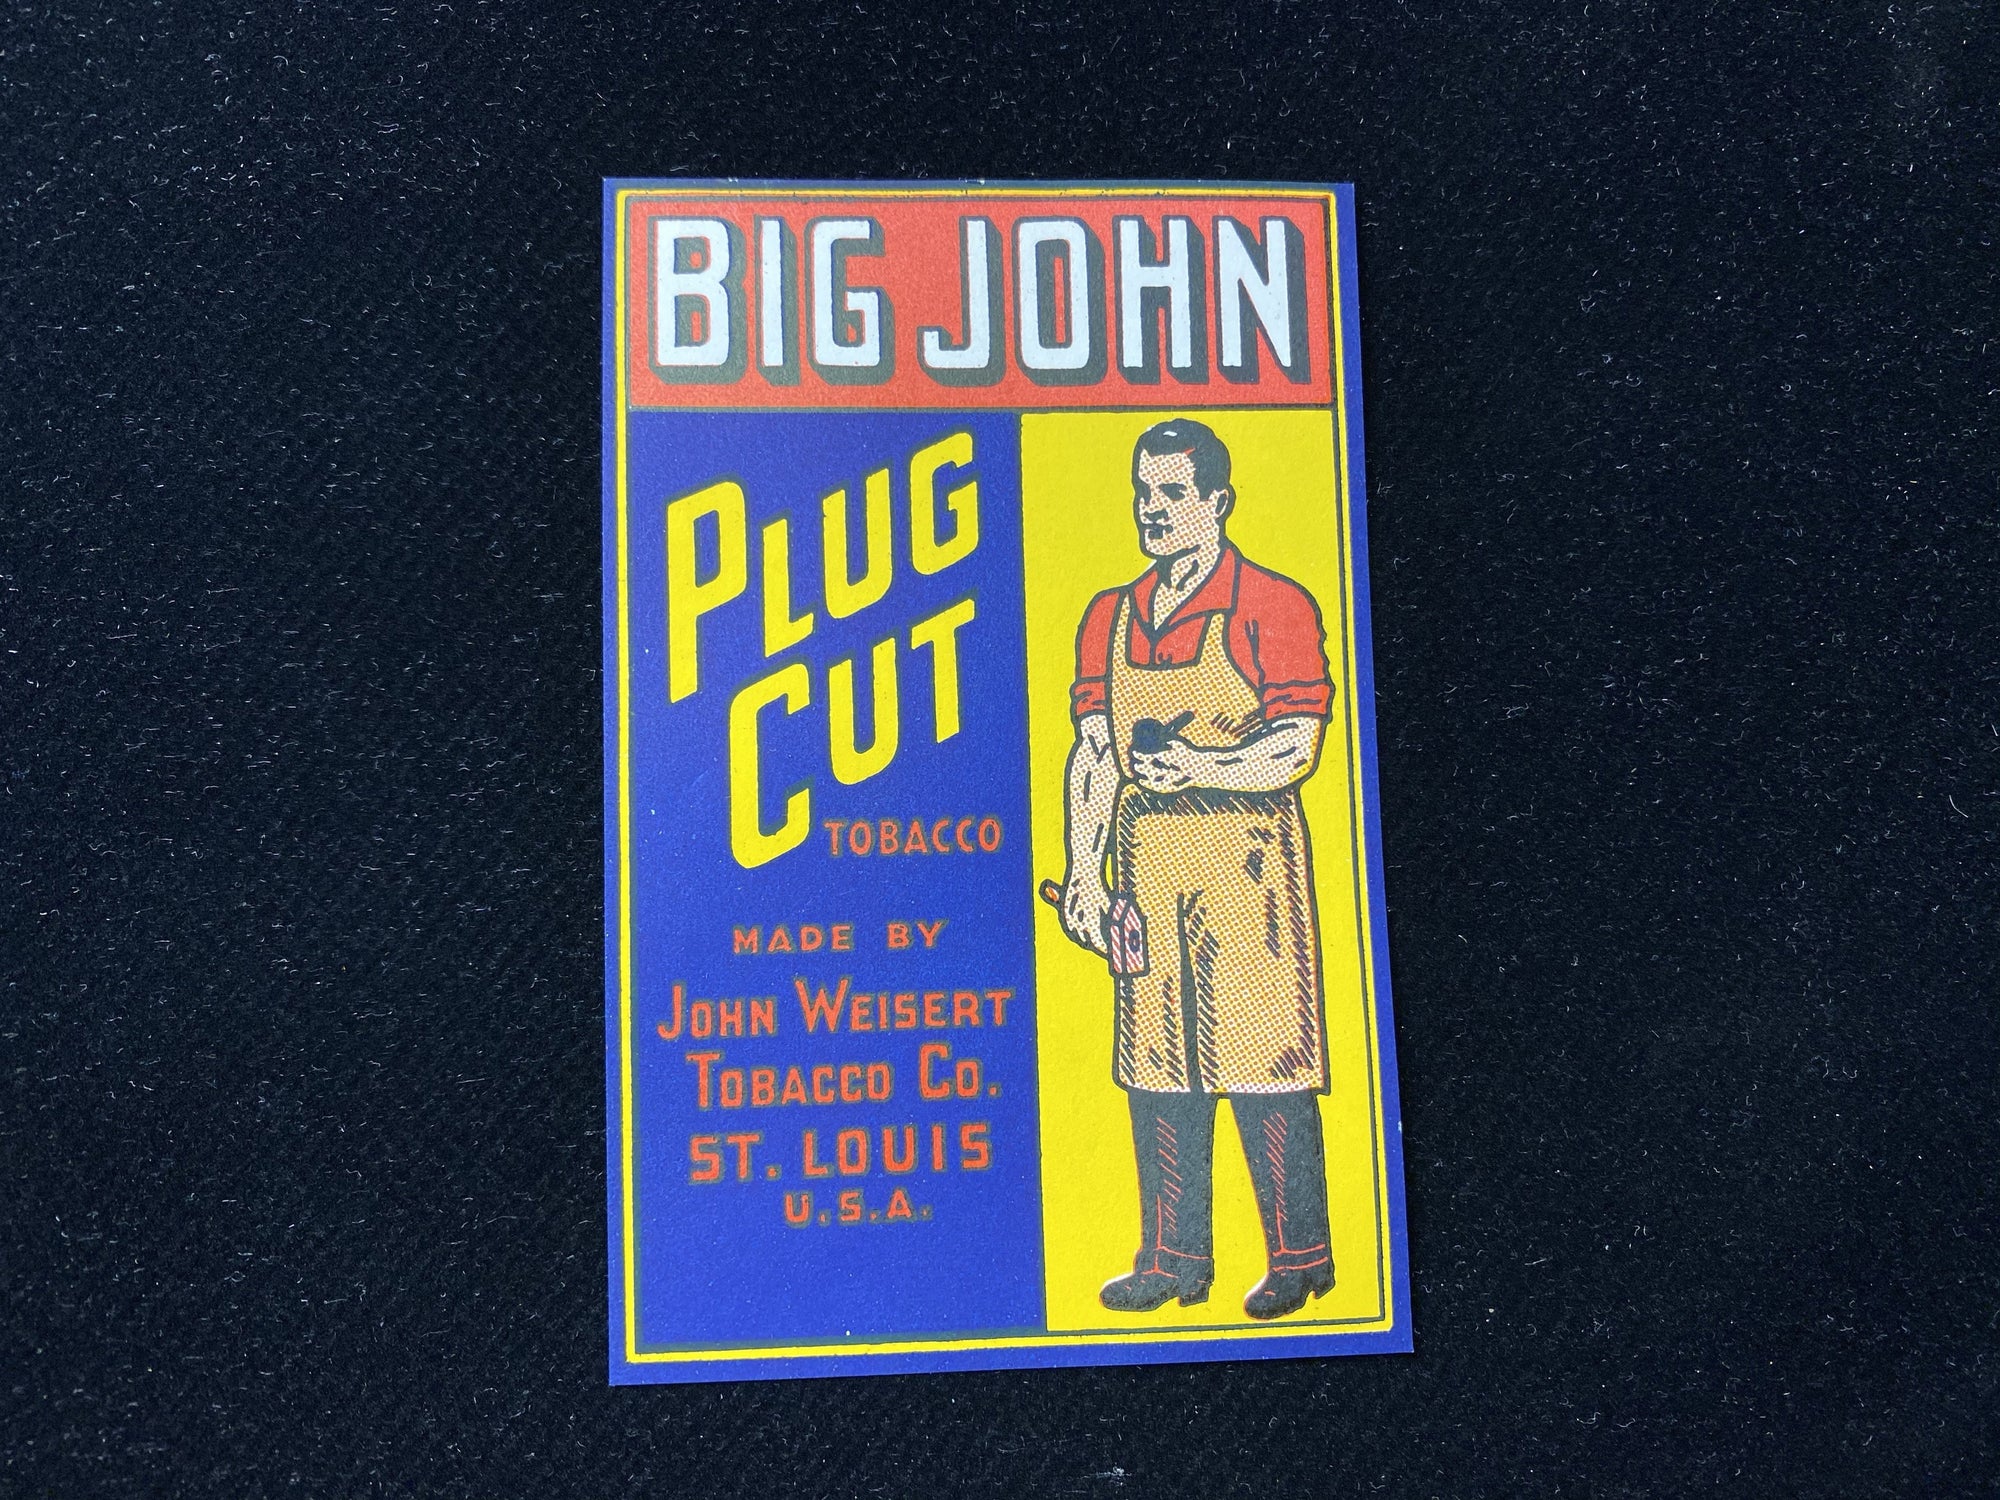 Vintage Tobacco label featuring Big John Plug Cut Tobacco